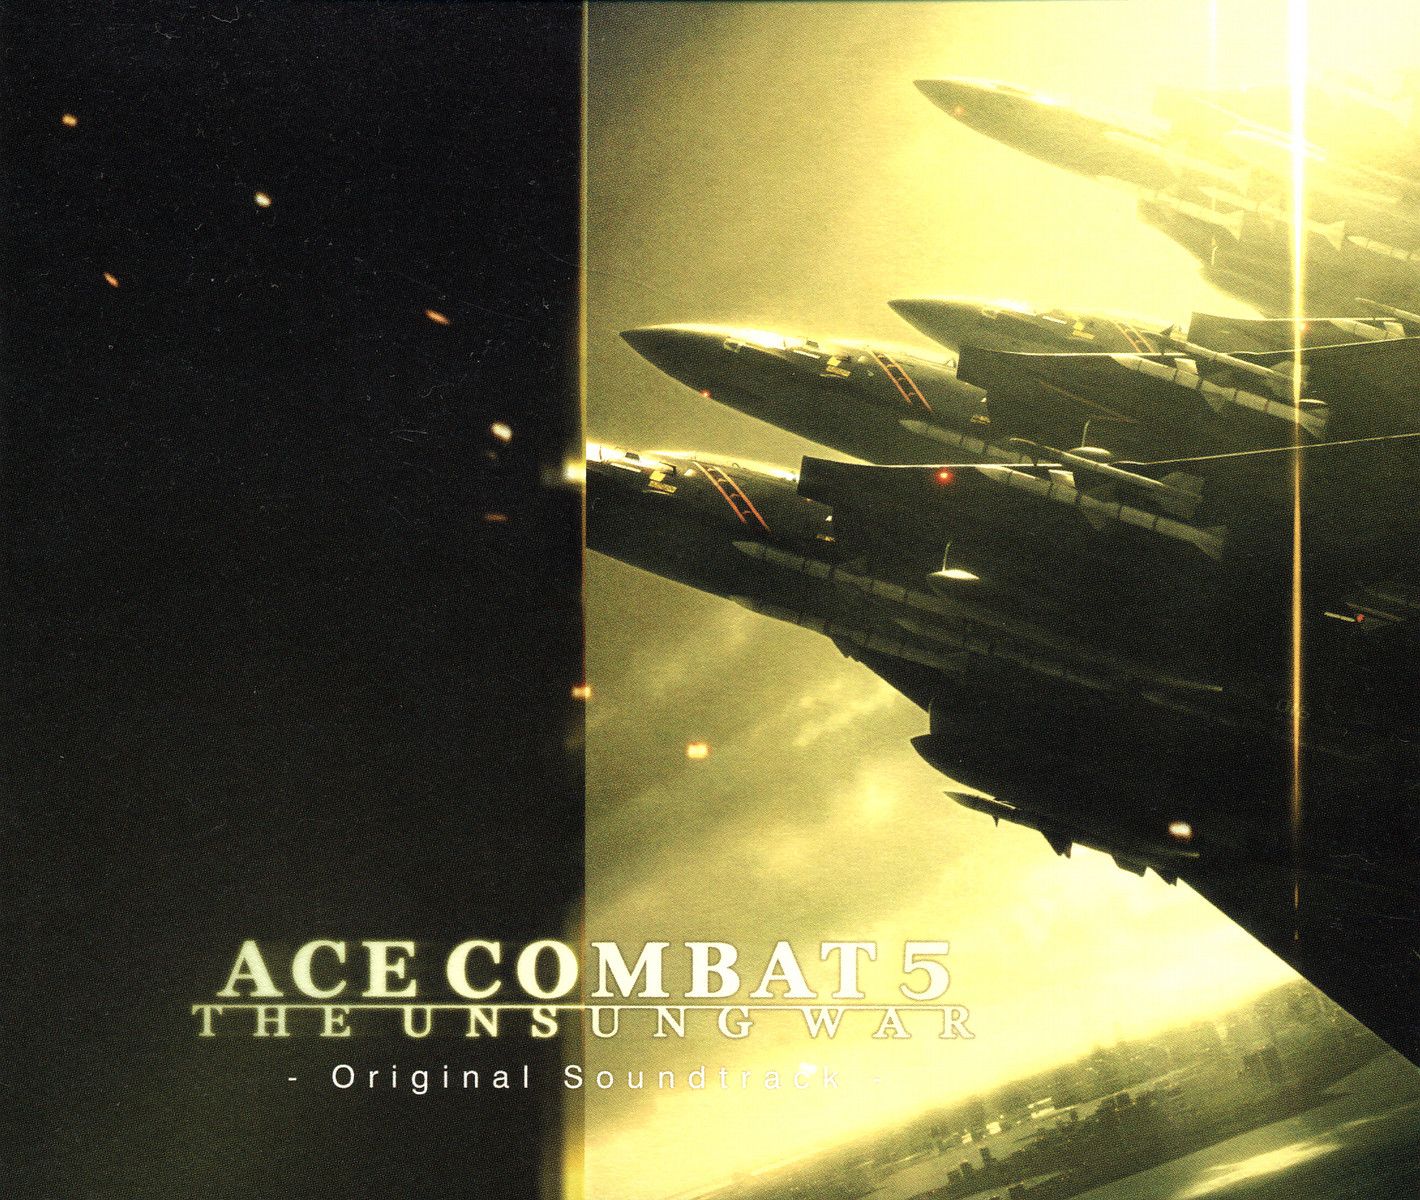 ace combat 4 soundtrack playlist